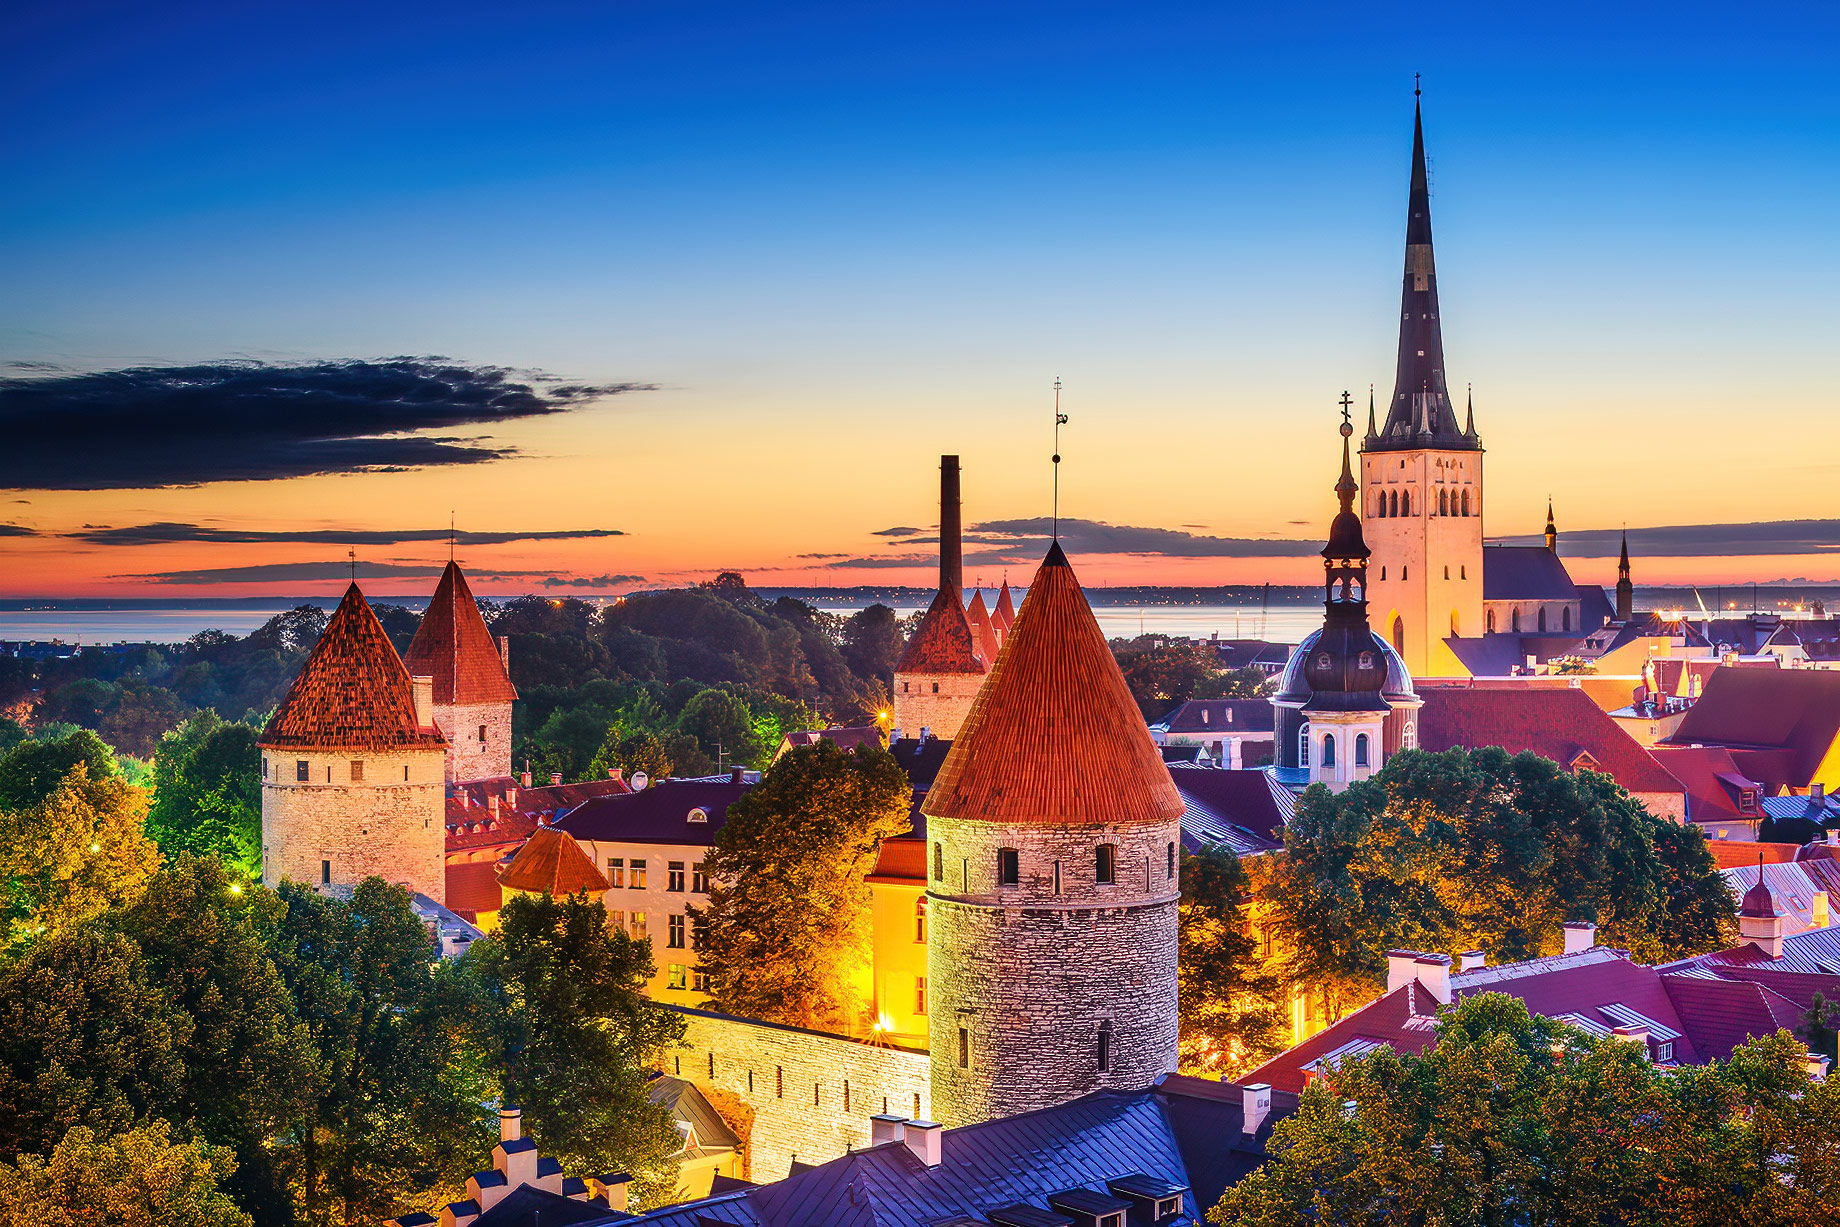 Tallinn, Estonia: A Fairy-tale Medieval City